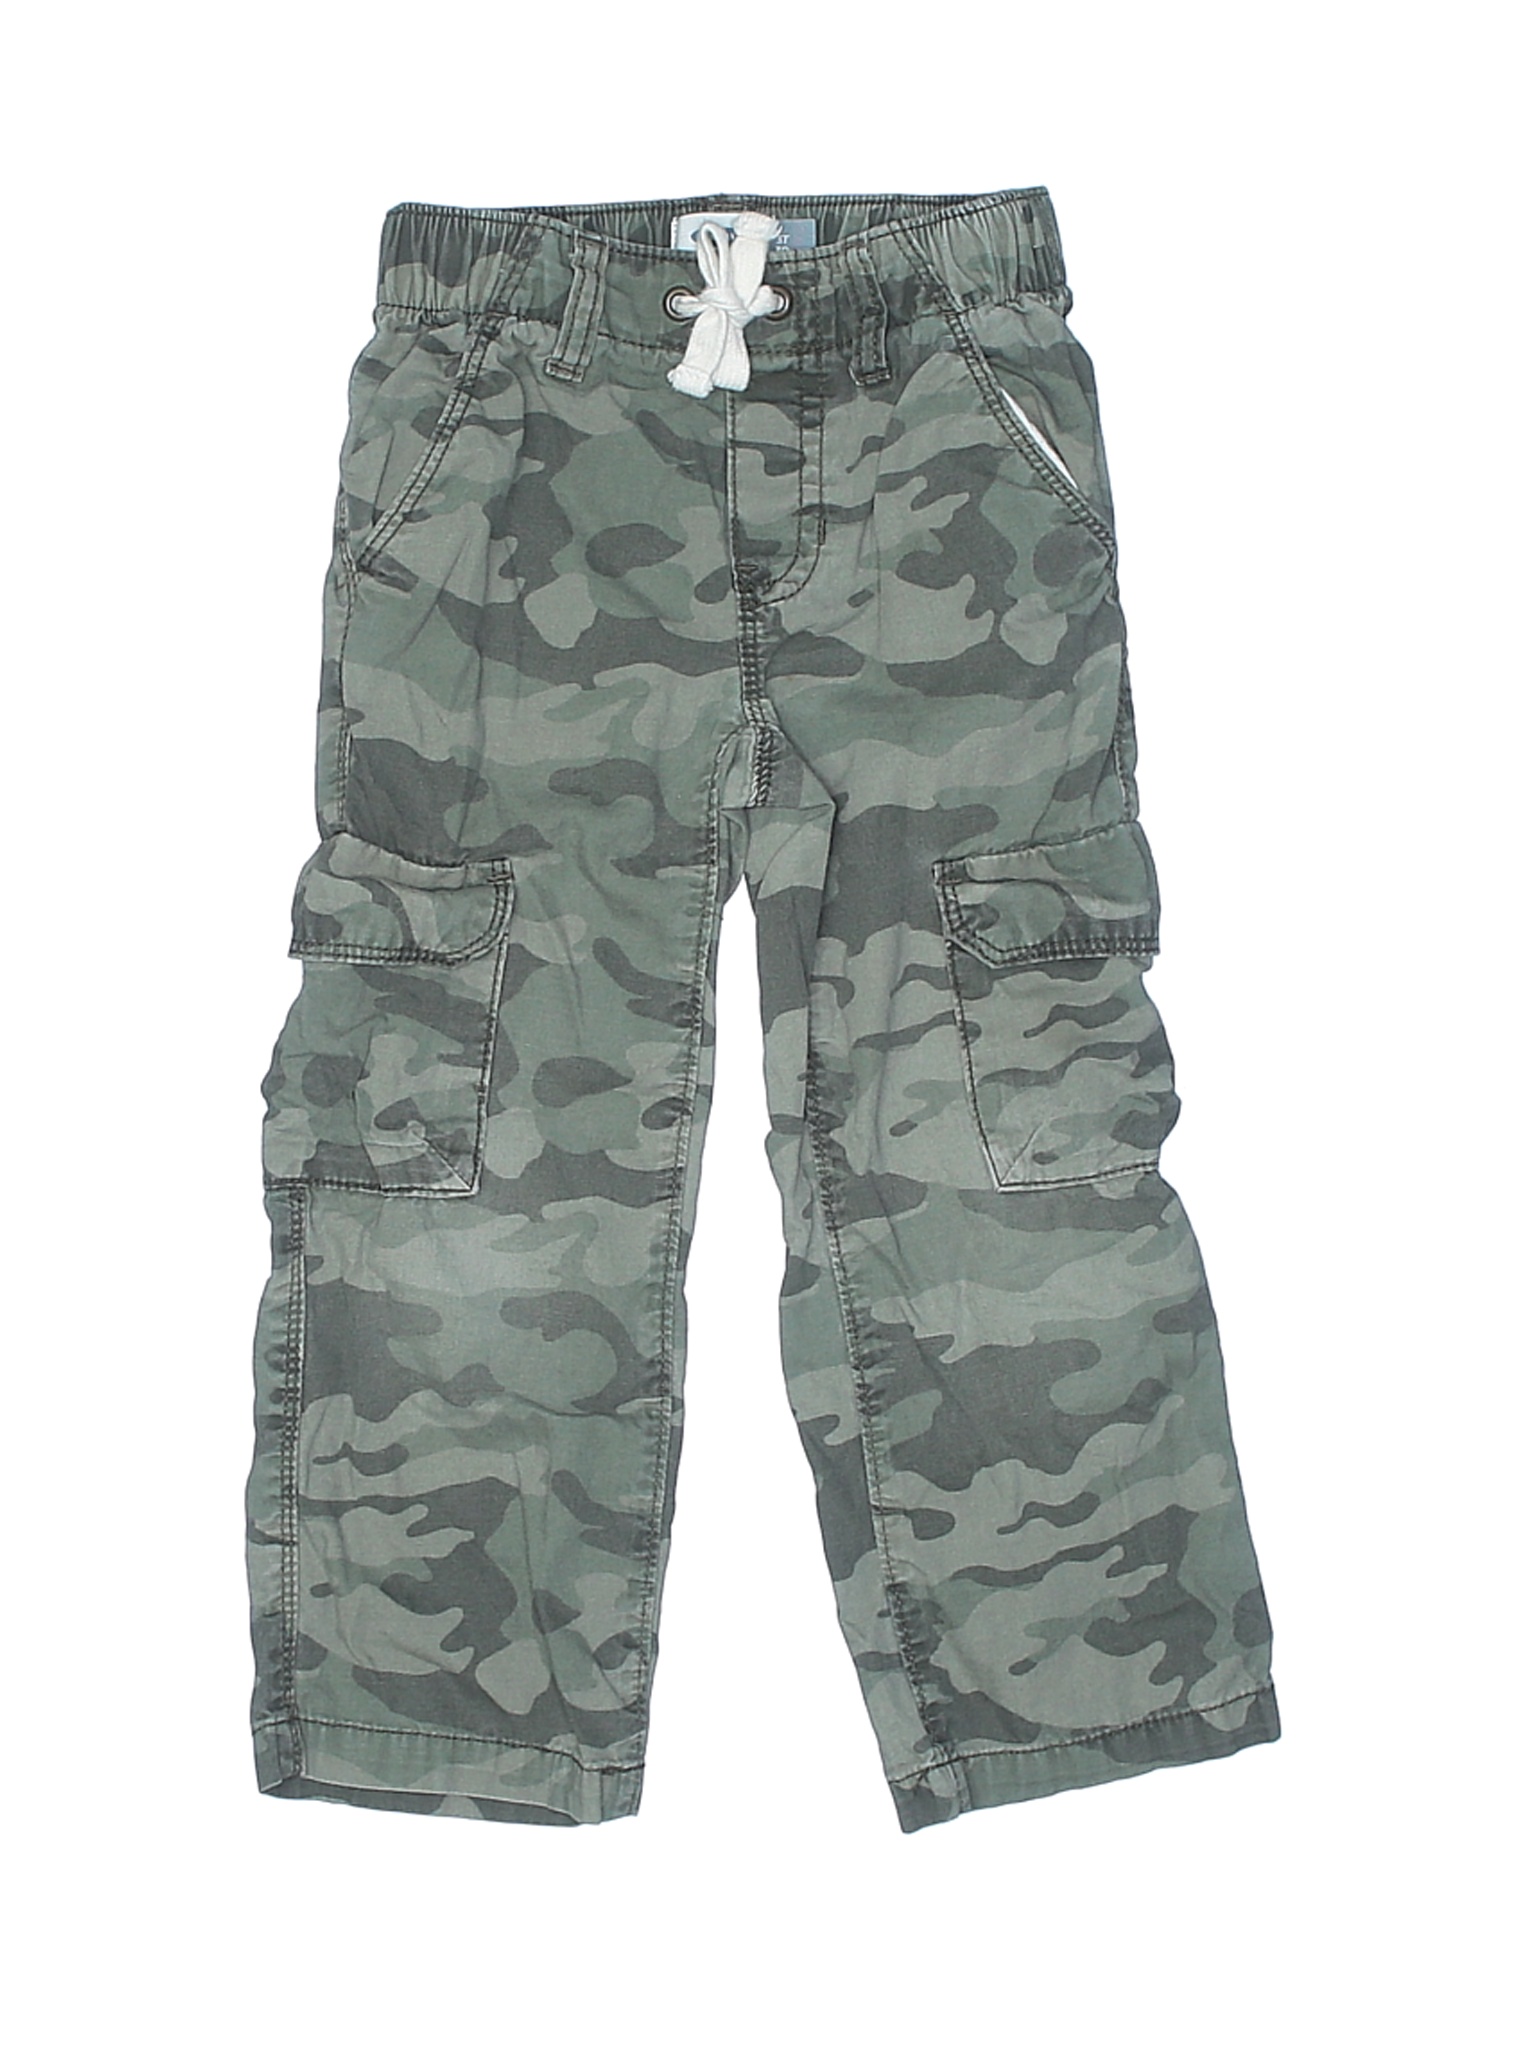 Old Navy Boys Gray Cargo Pants 3T | eBay